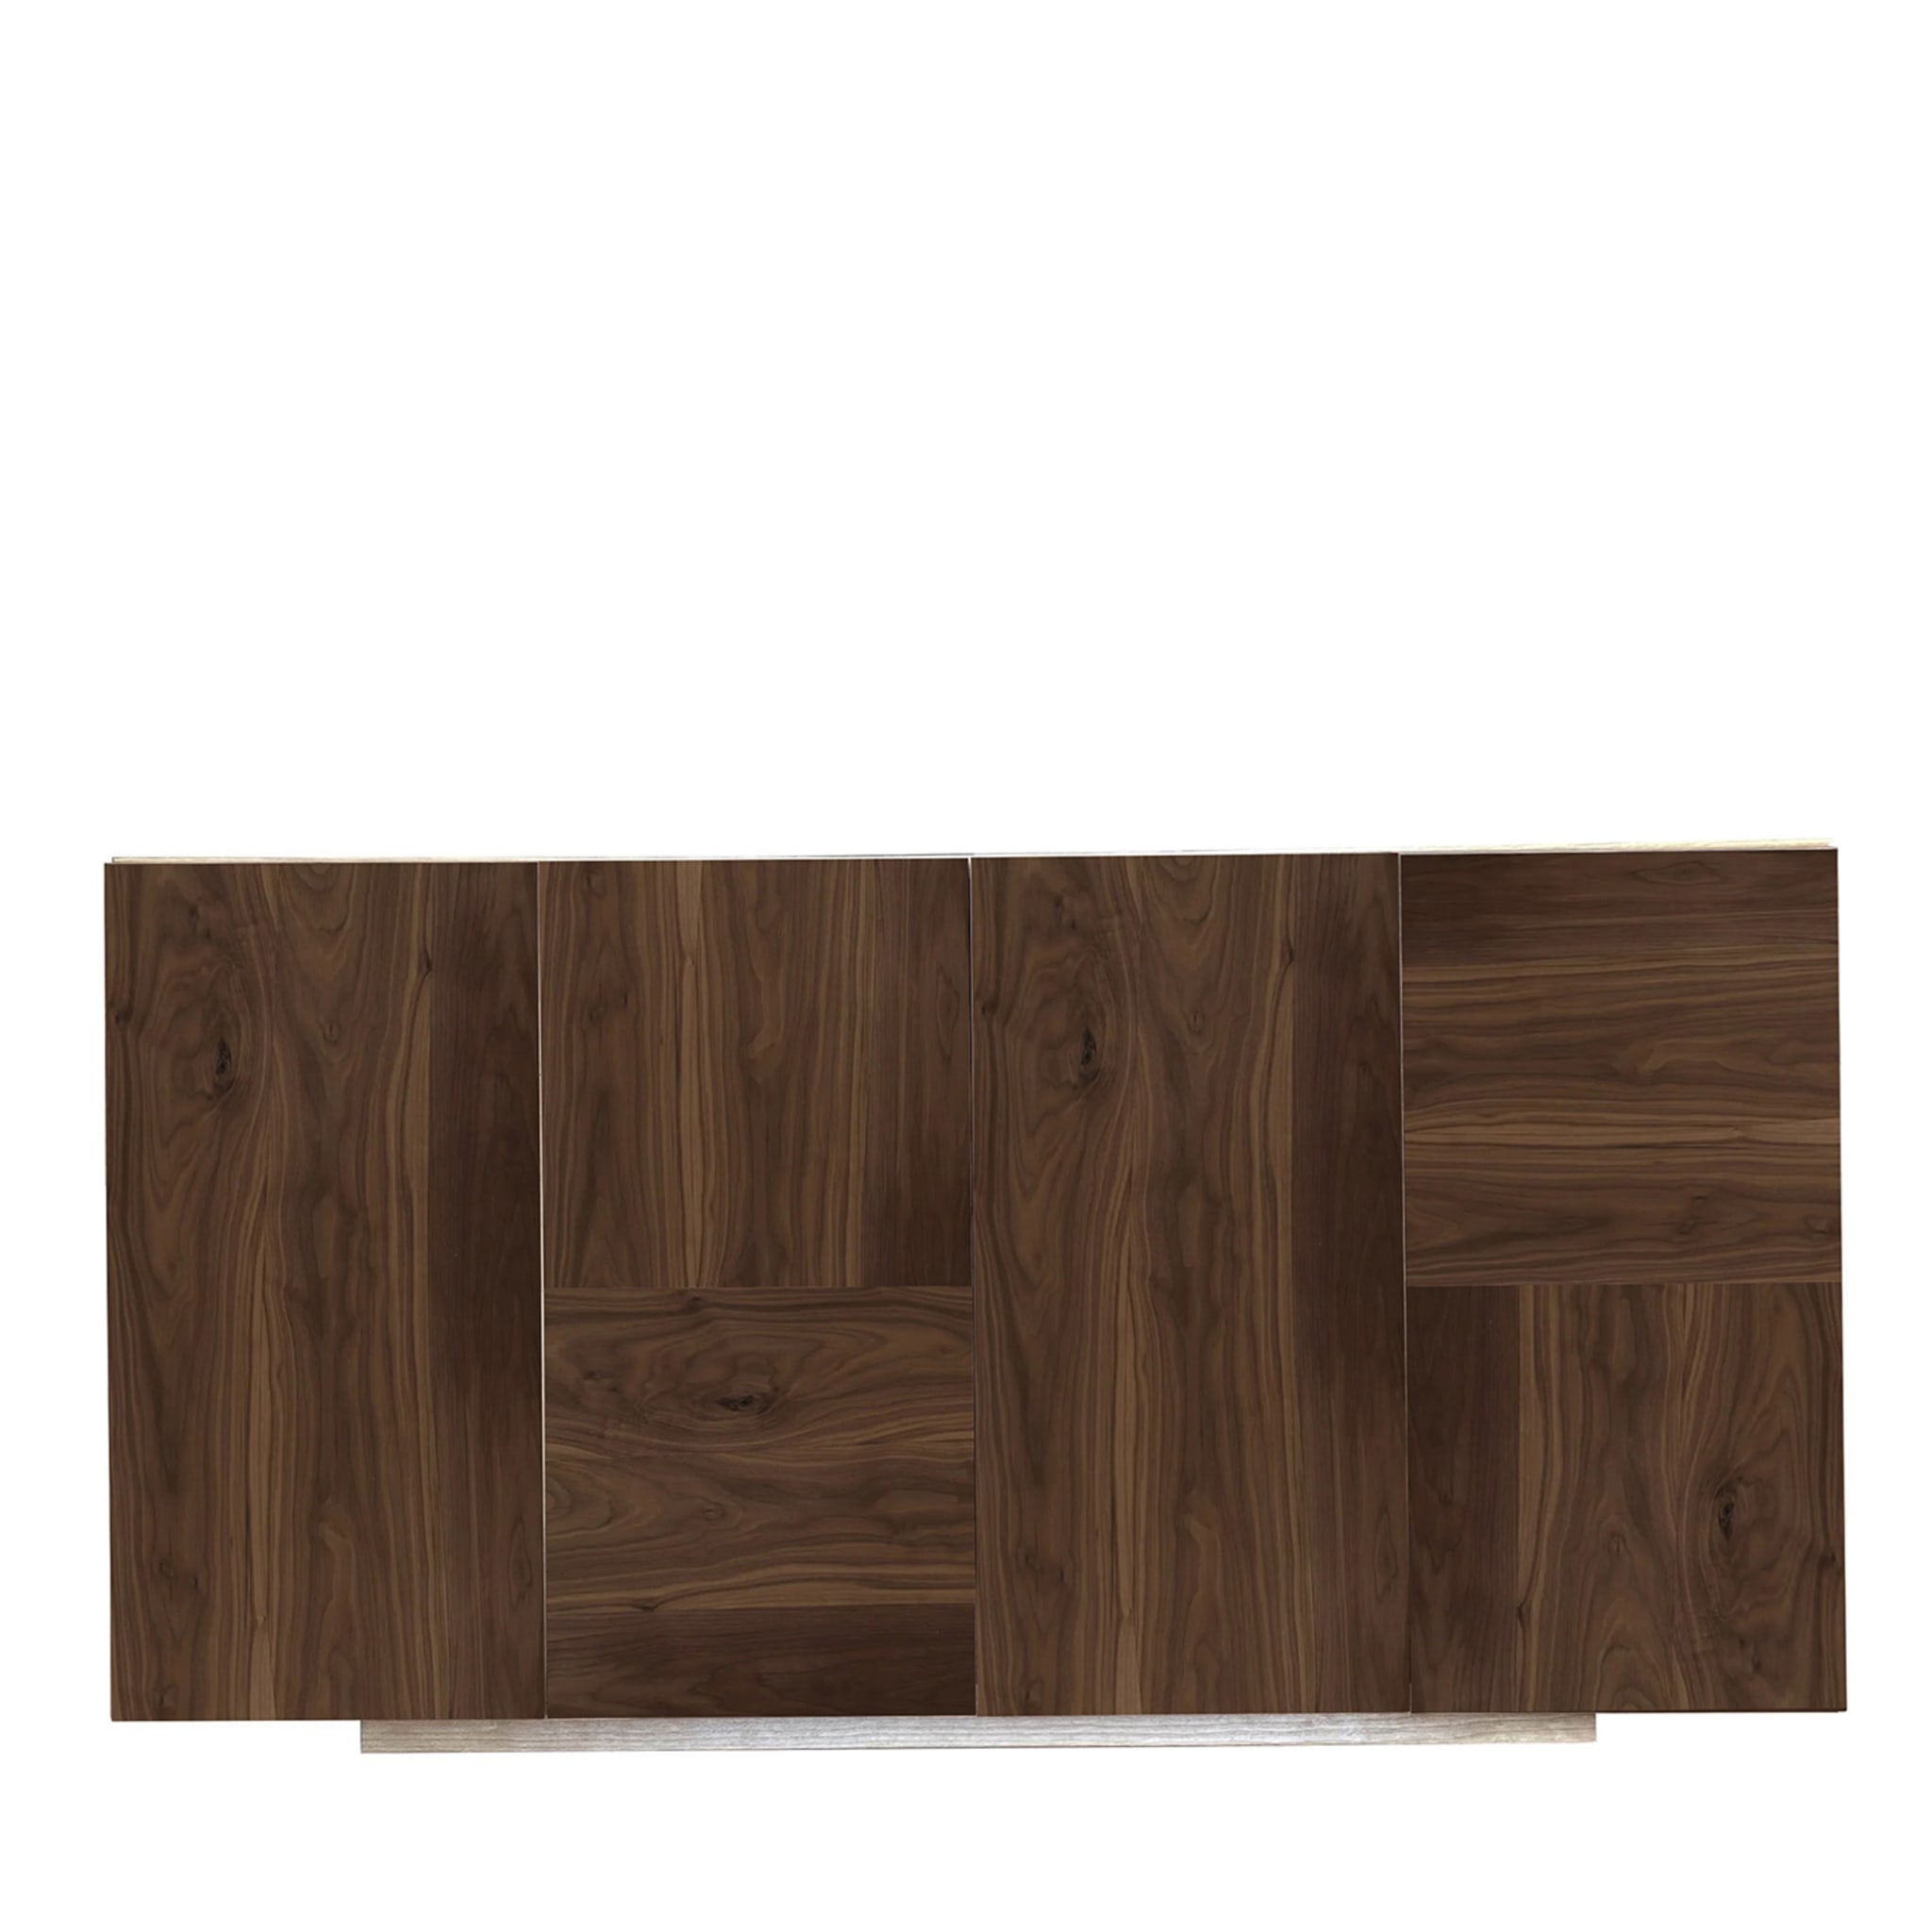 Boccadarno Uno 4-Door Walnut Sideboard by Meccani Studio - Main view